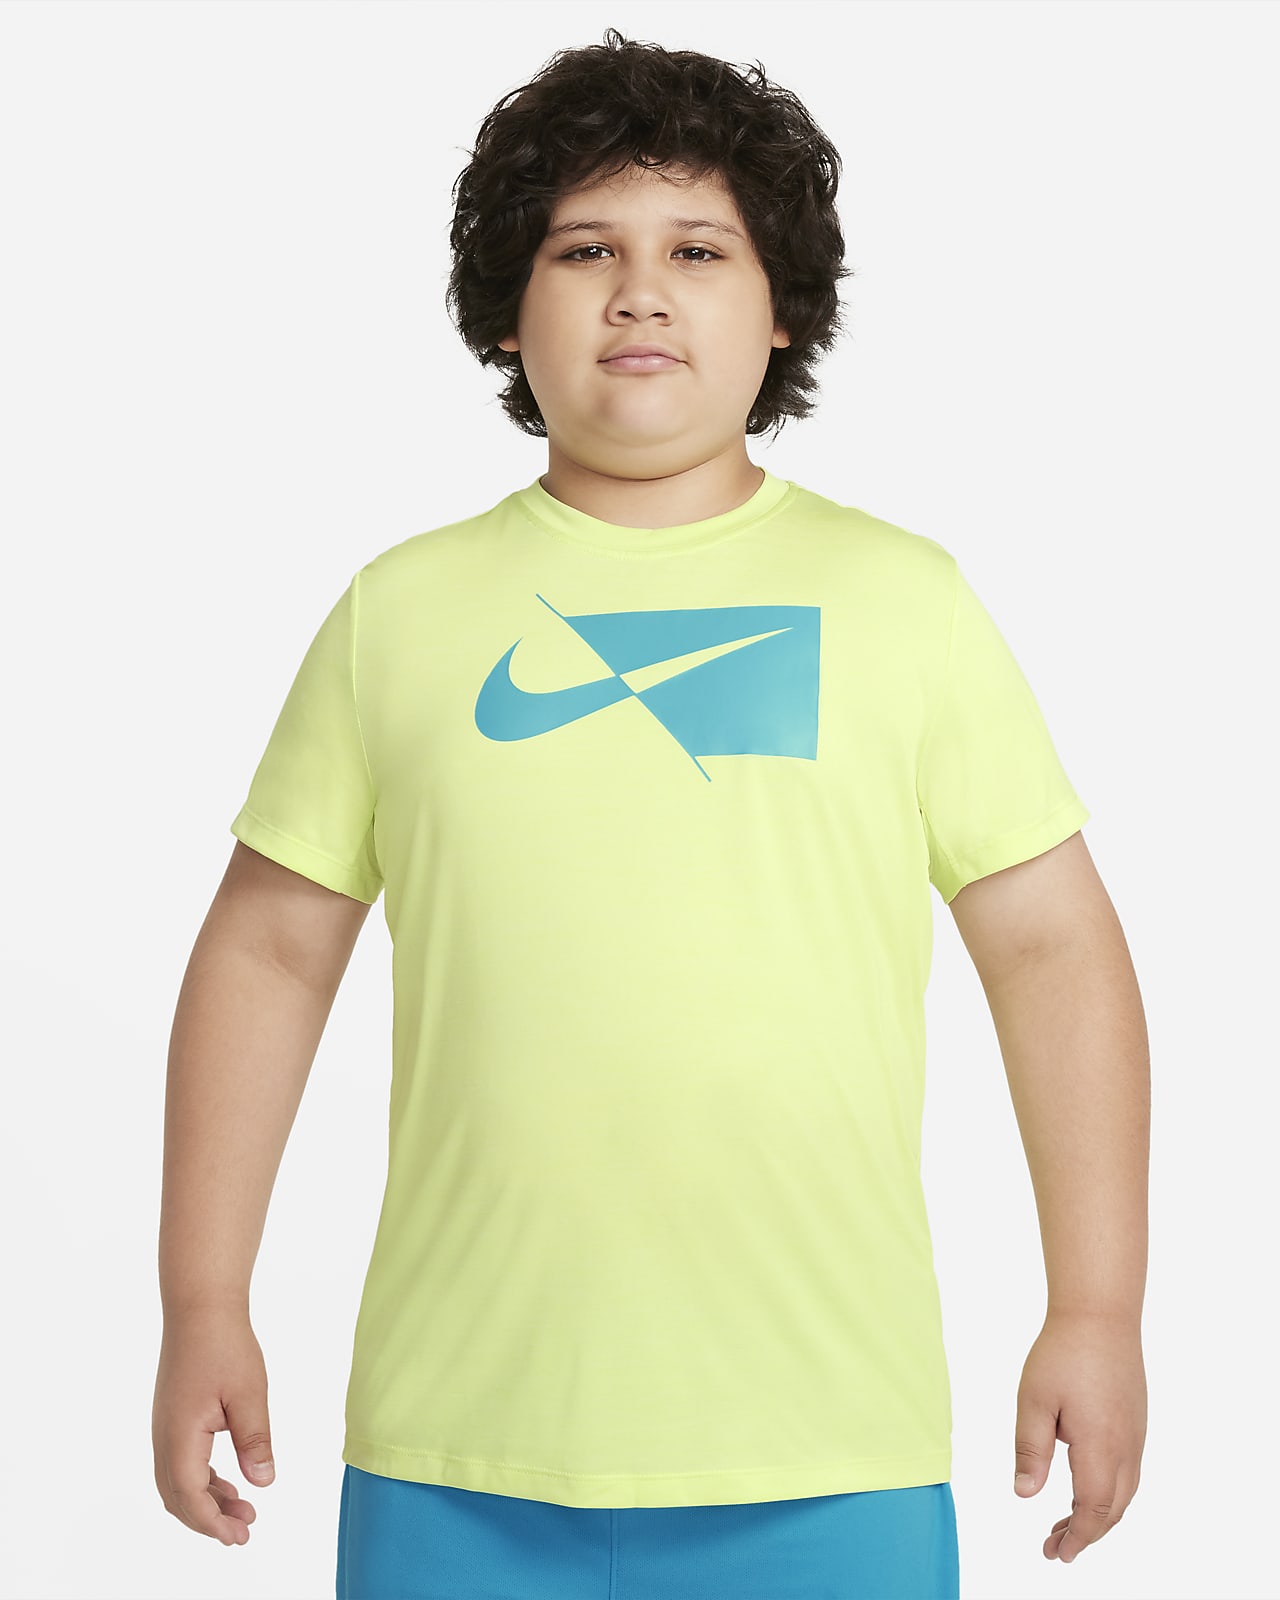 de entrenamiento de manga corta para niños talla (talla extendida). Nike.com